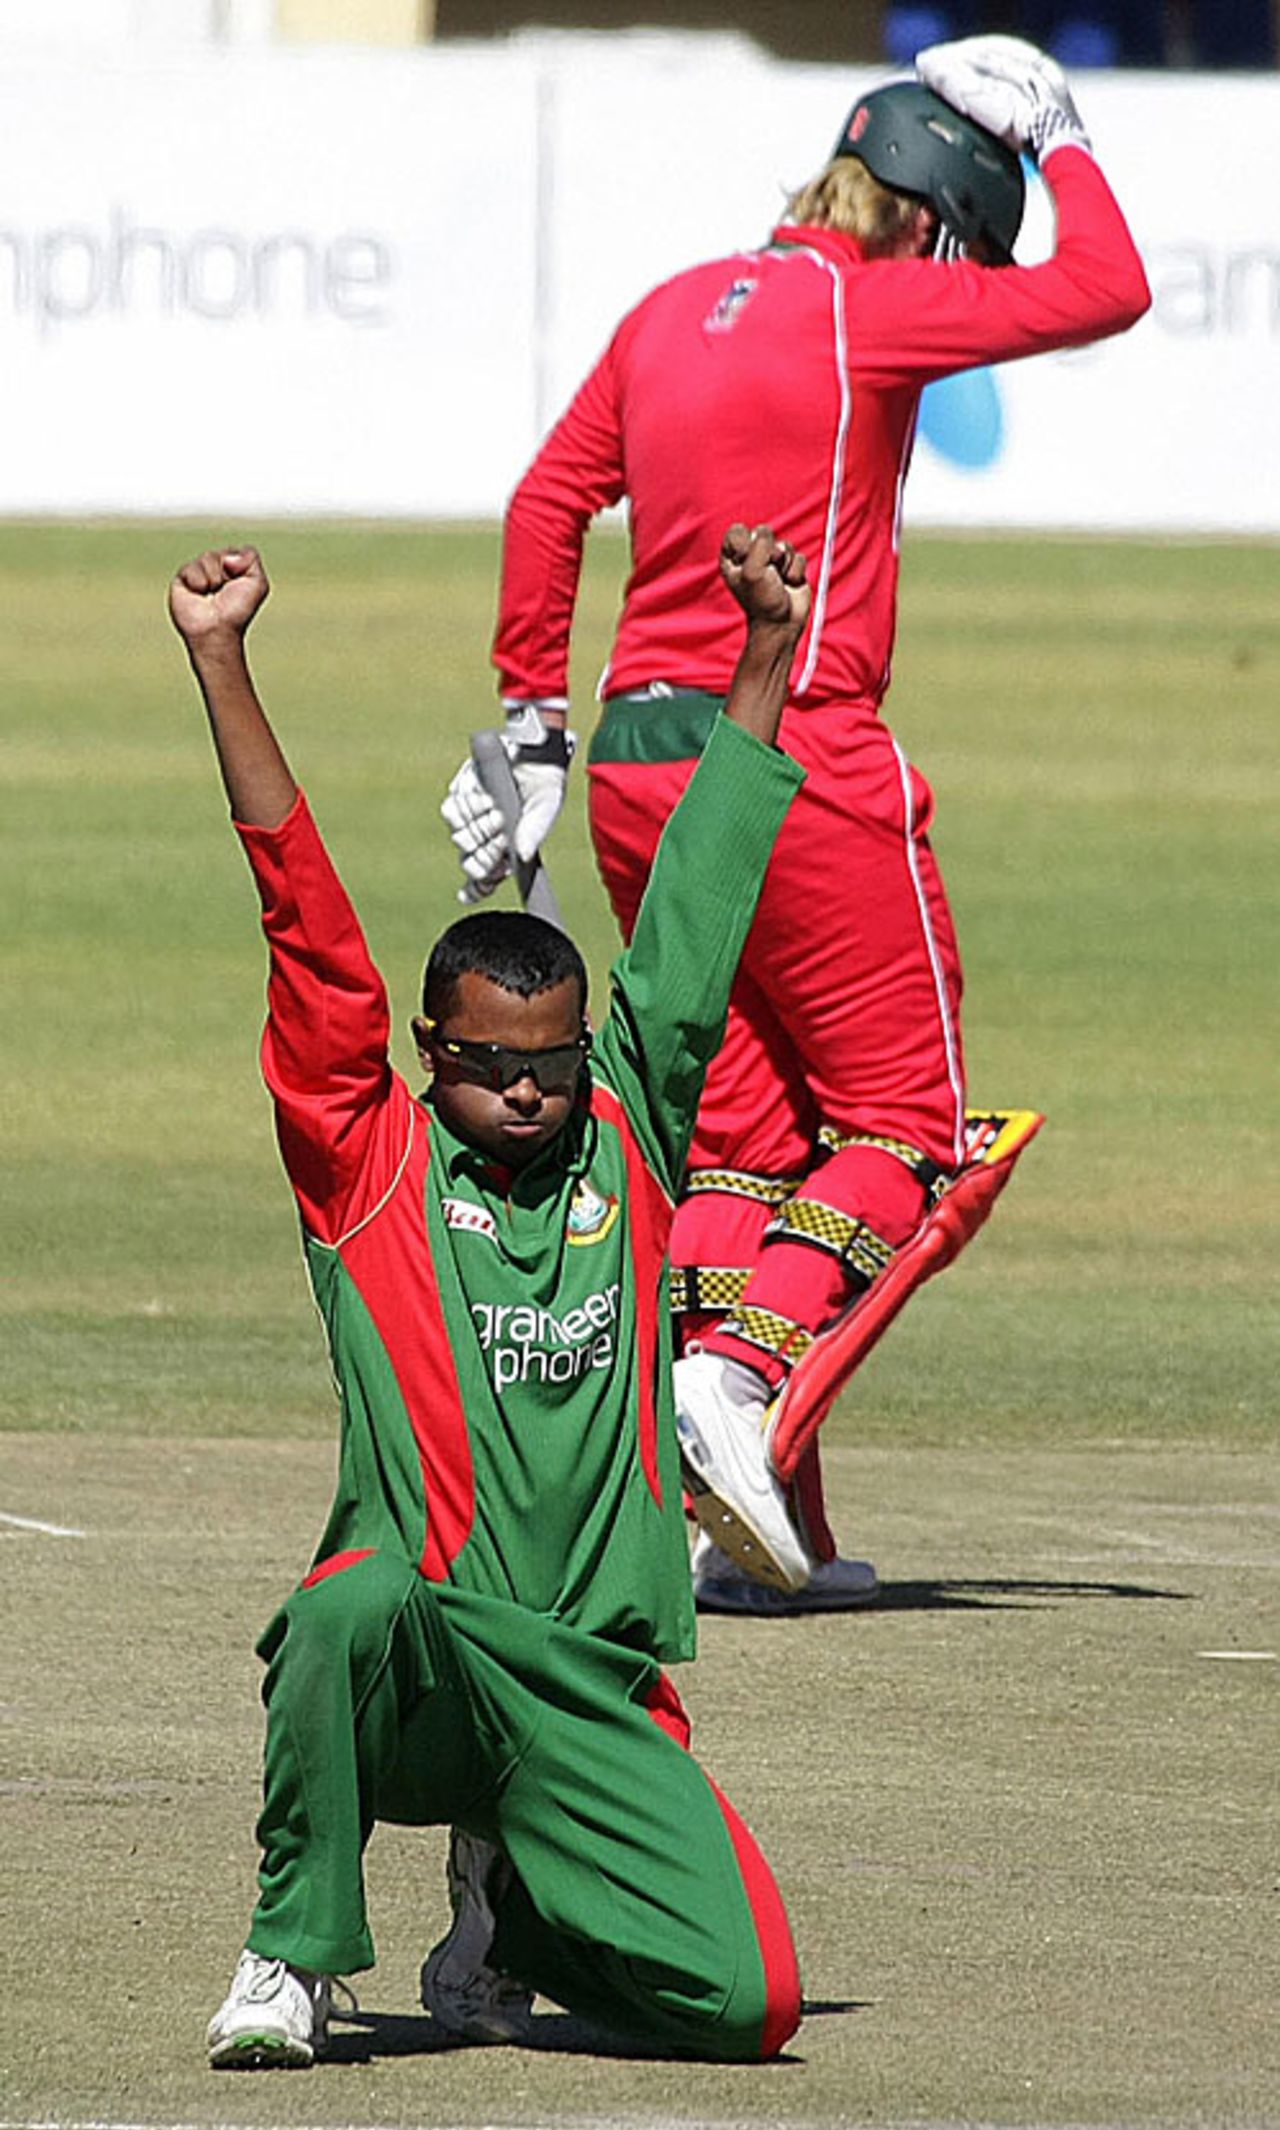 Enamul Haque jnr is delighted after a dismissal, Zimbabwe v Bangladesh, 4th ODI, Bulawayo, August 16, 2009 